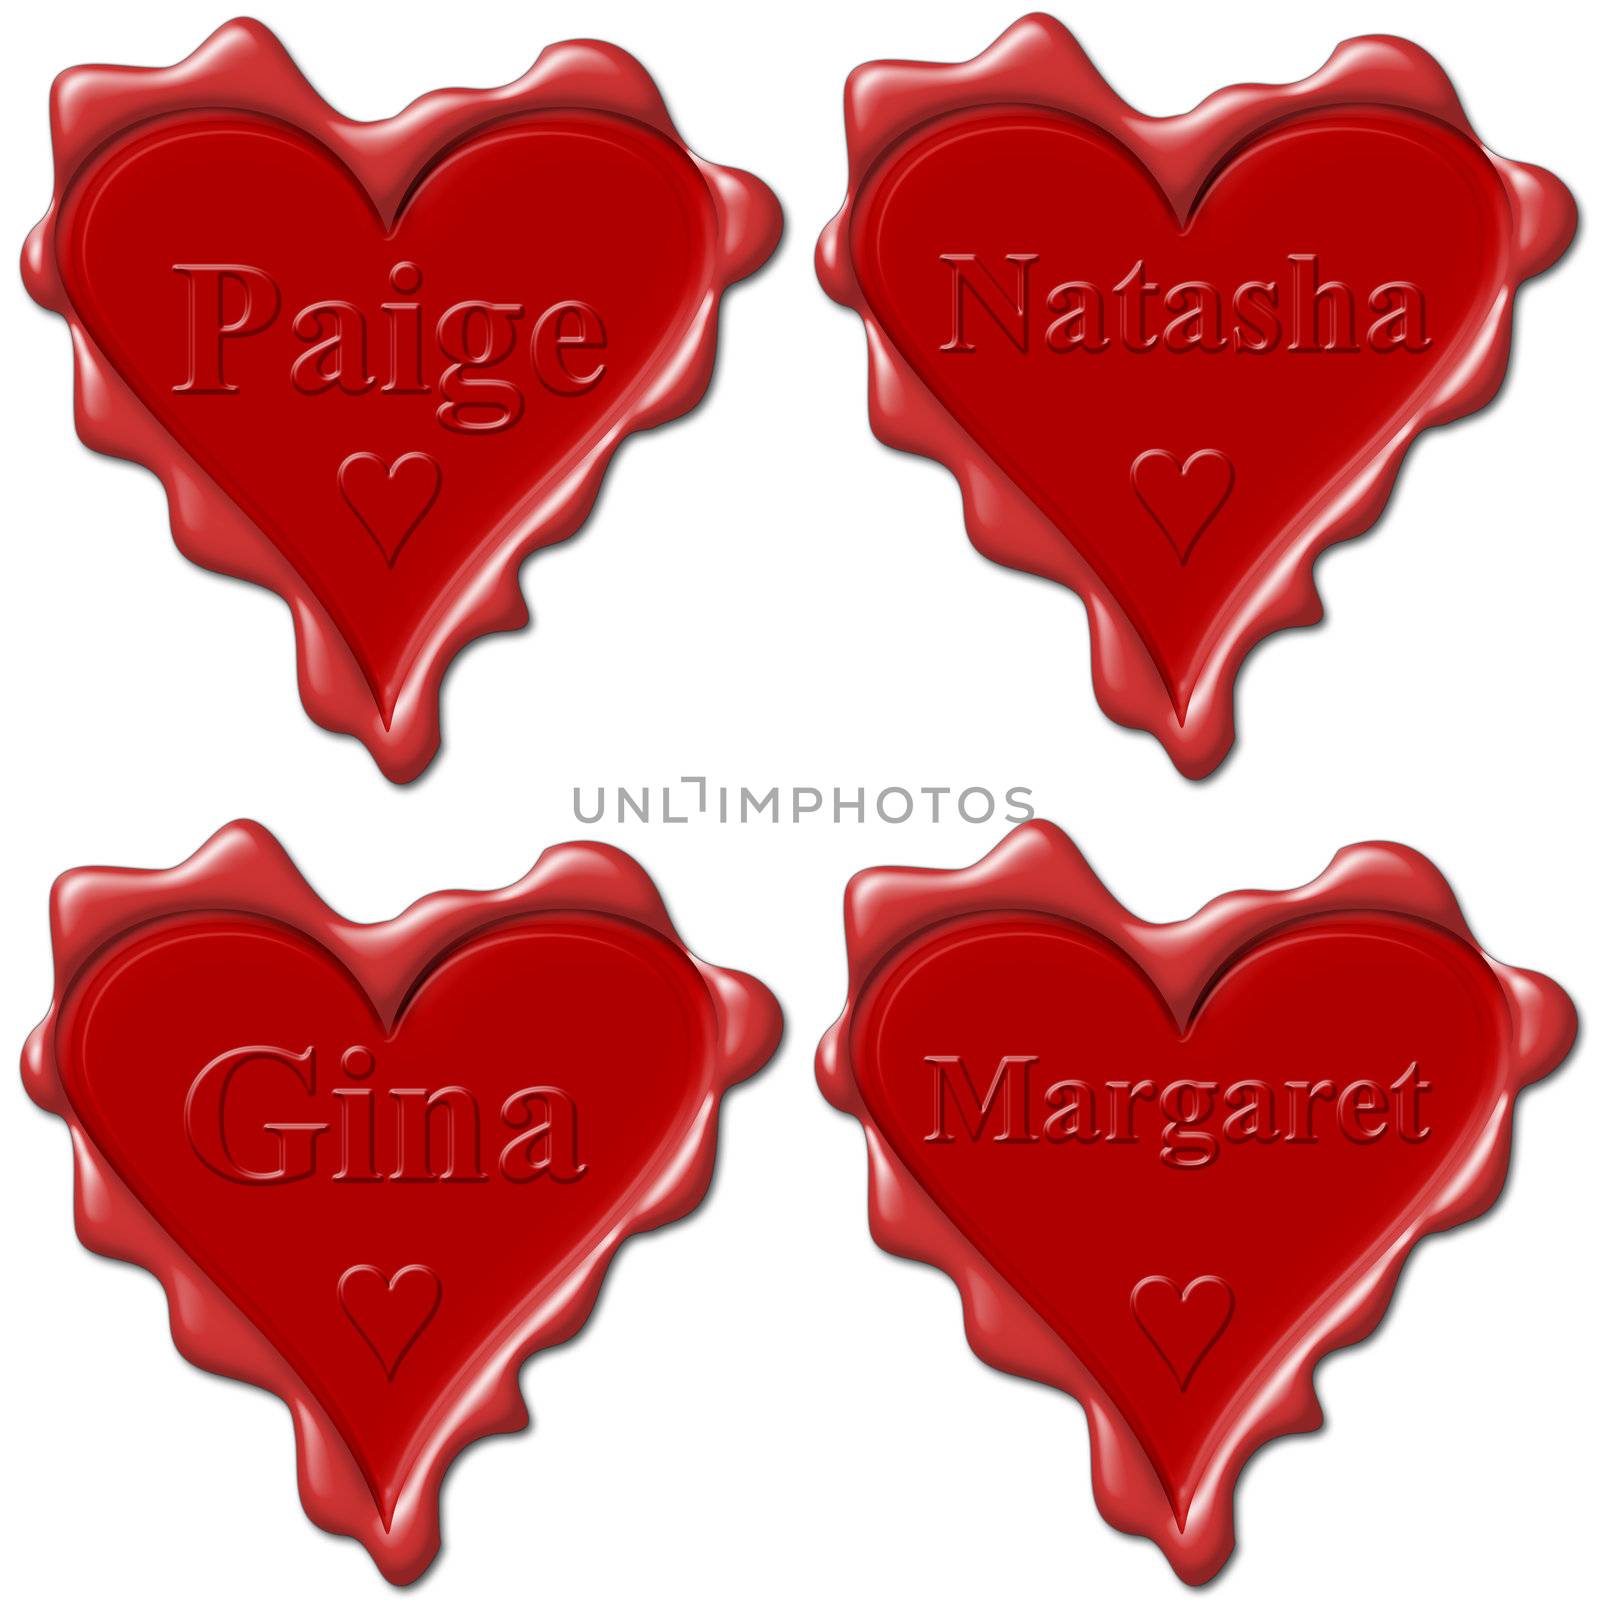 Valentine love hearts with names: Paige, Natasha, Gina, Margaret by mozzyb